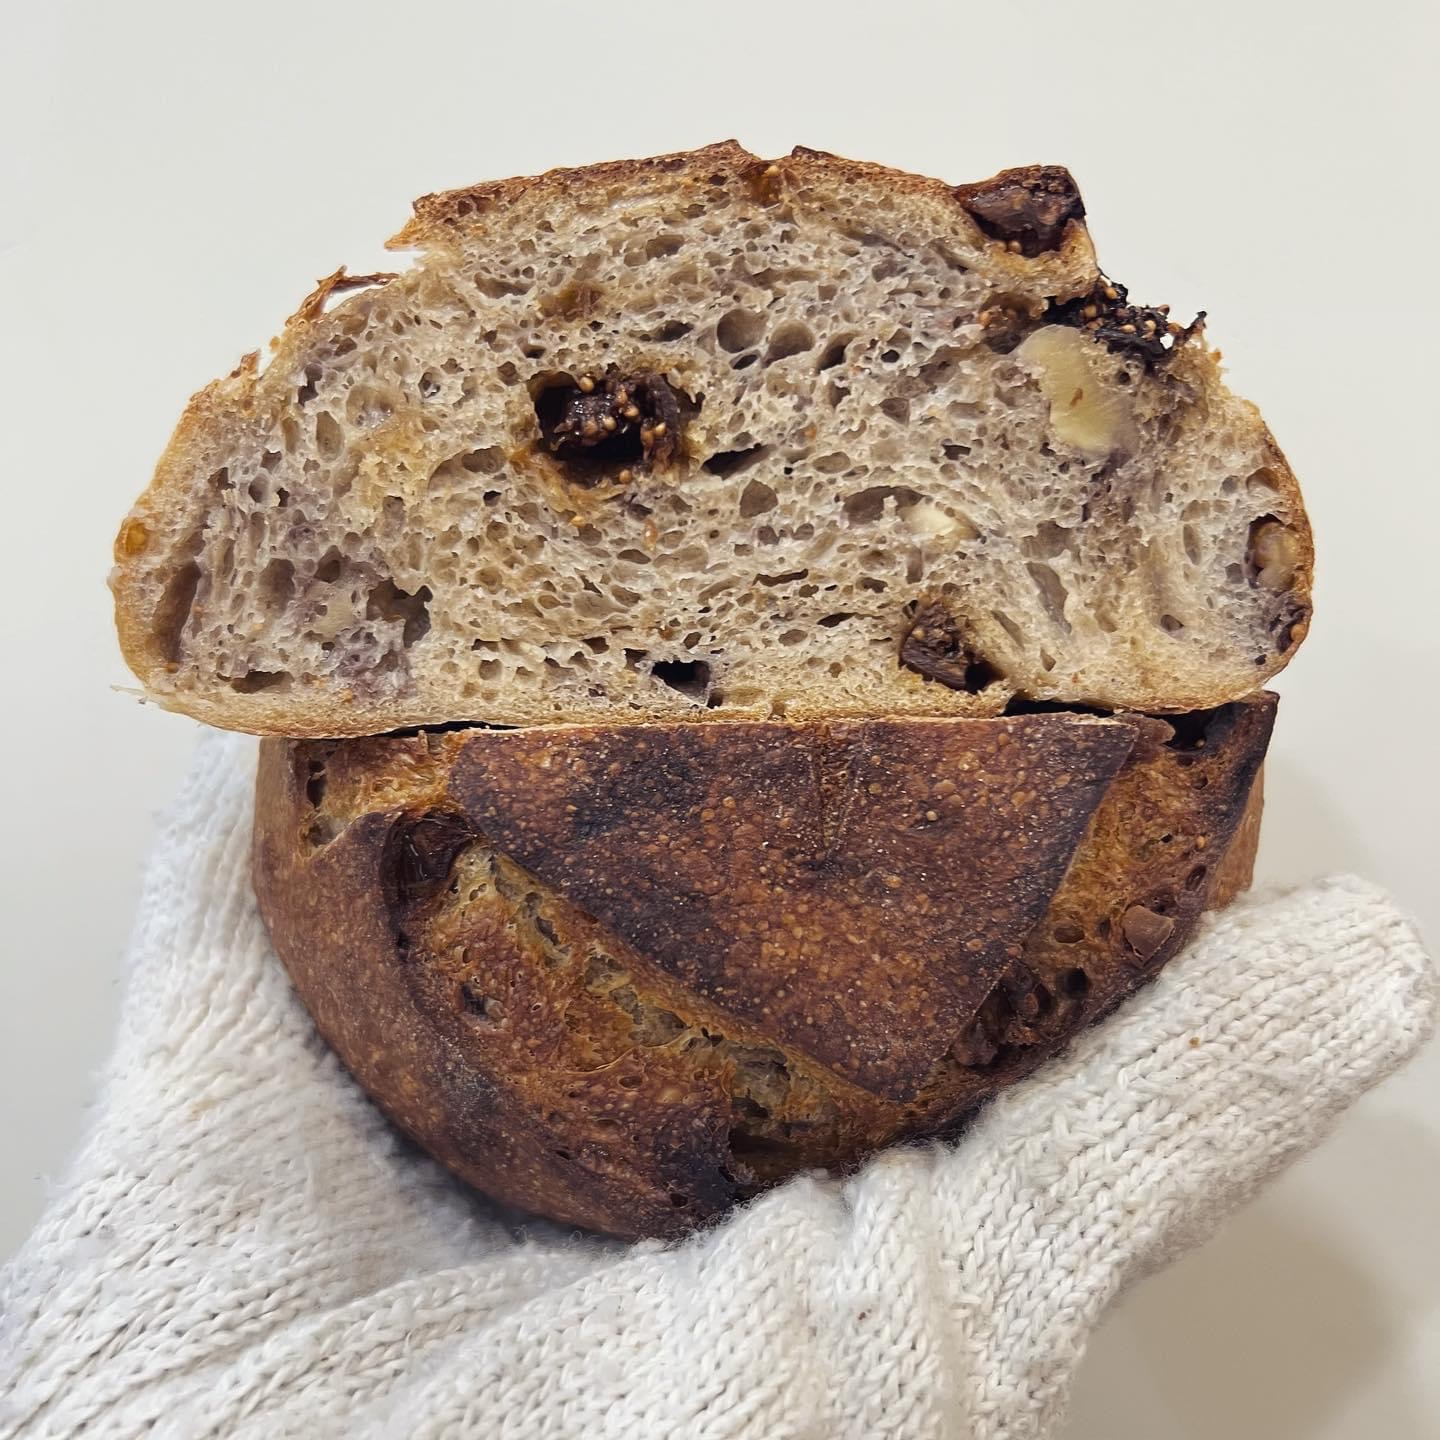 無花果核桃酸種麵包/Figs and walnuts sourdough bread